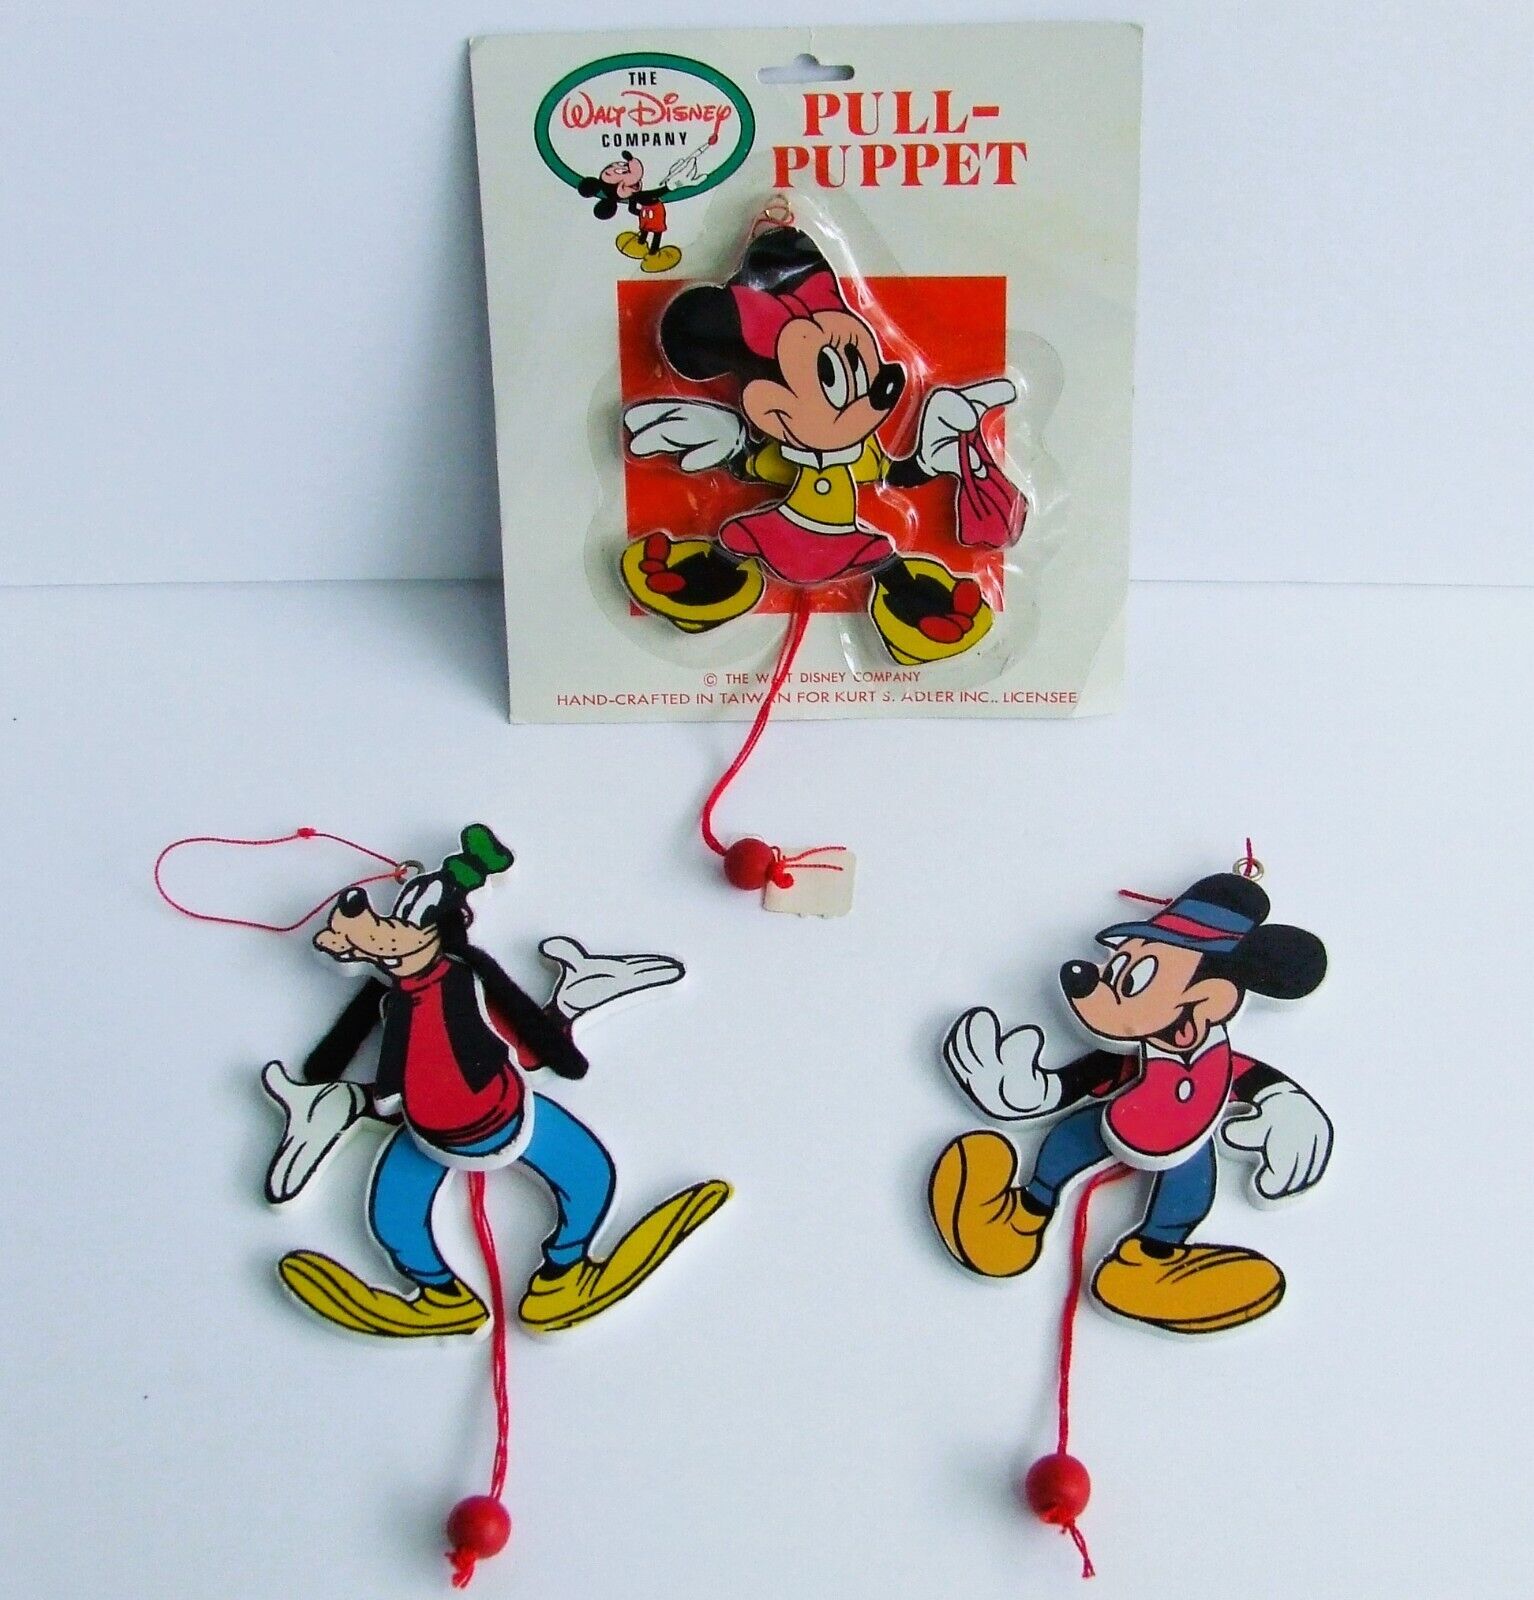 Set 3 Walt Disney Company Kurt Adler Minnie Mickey Mouse Goofy Wood Pull Puppet